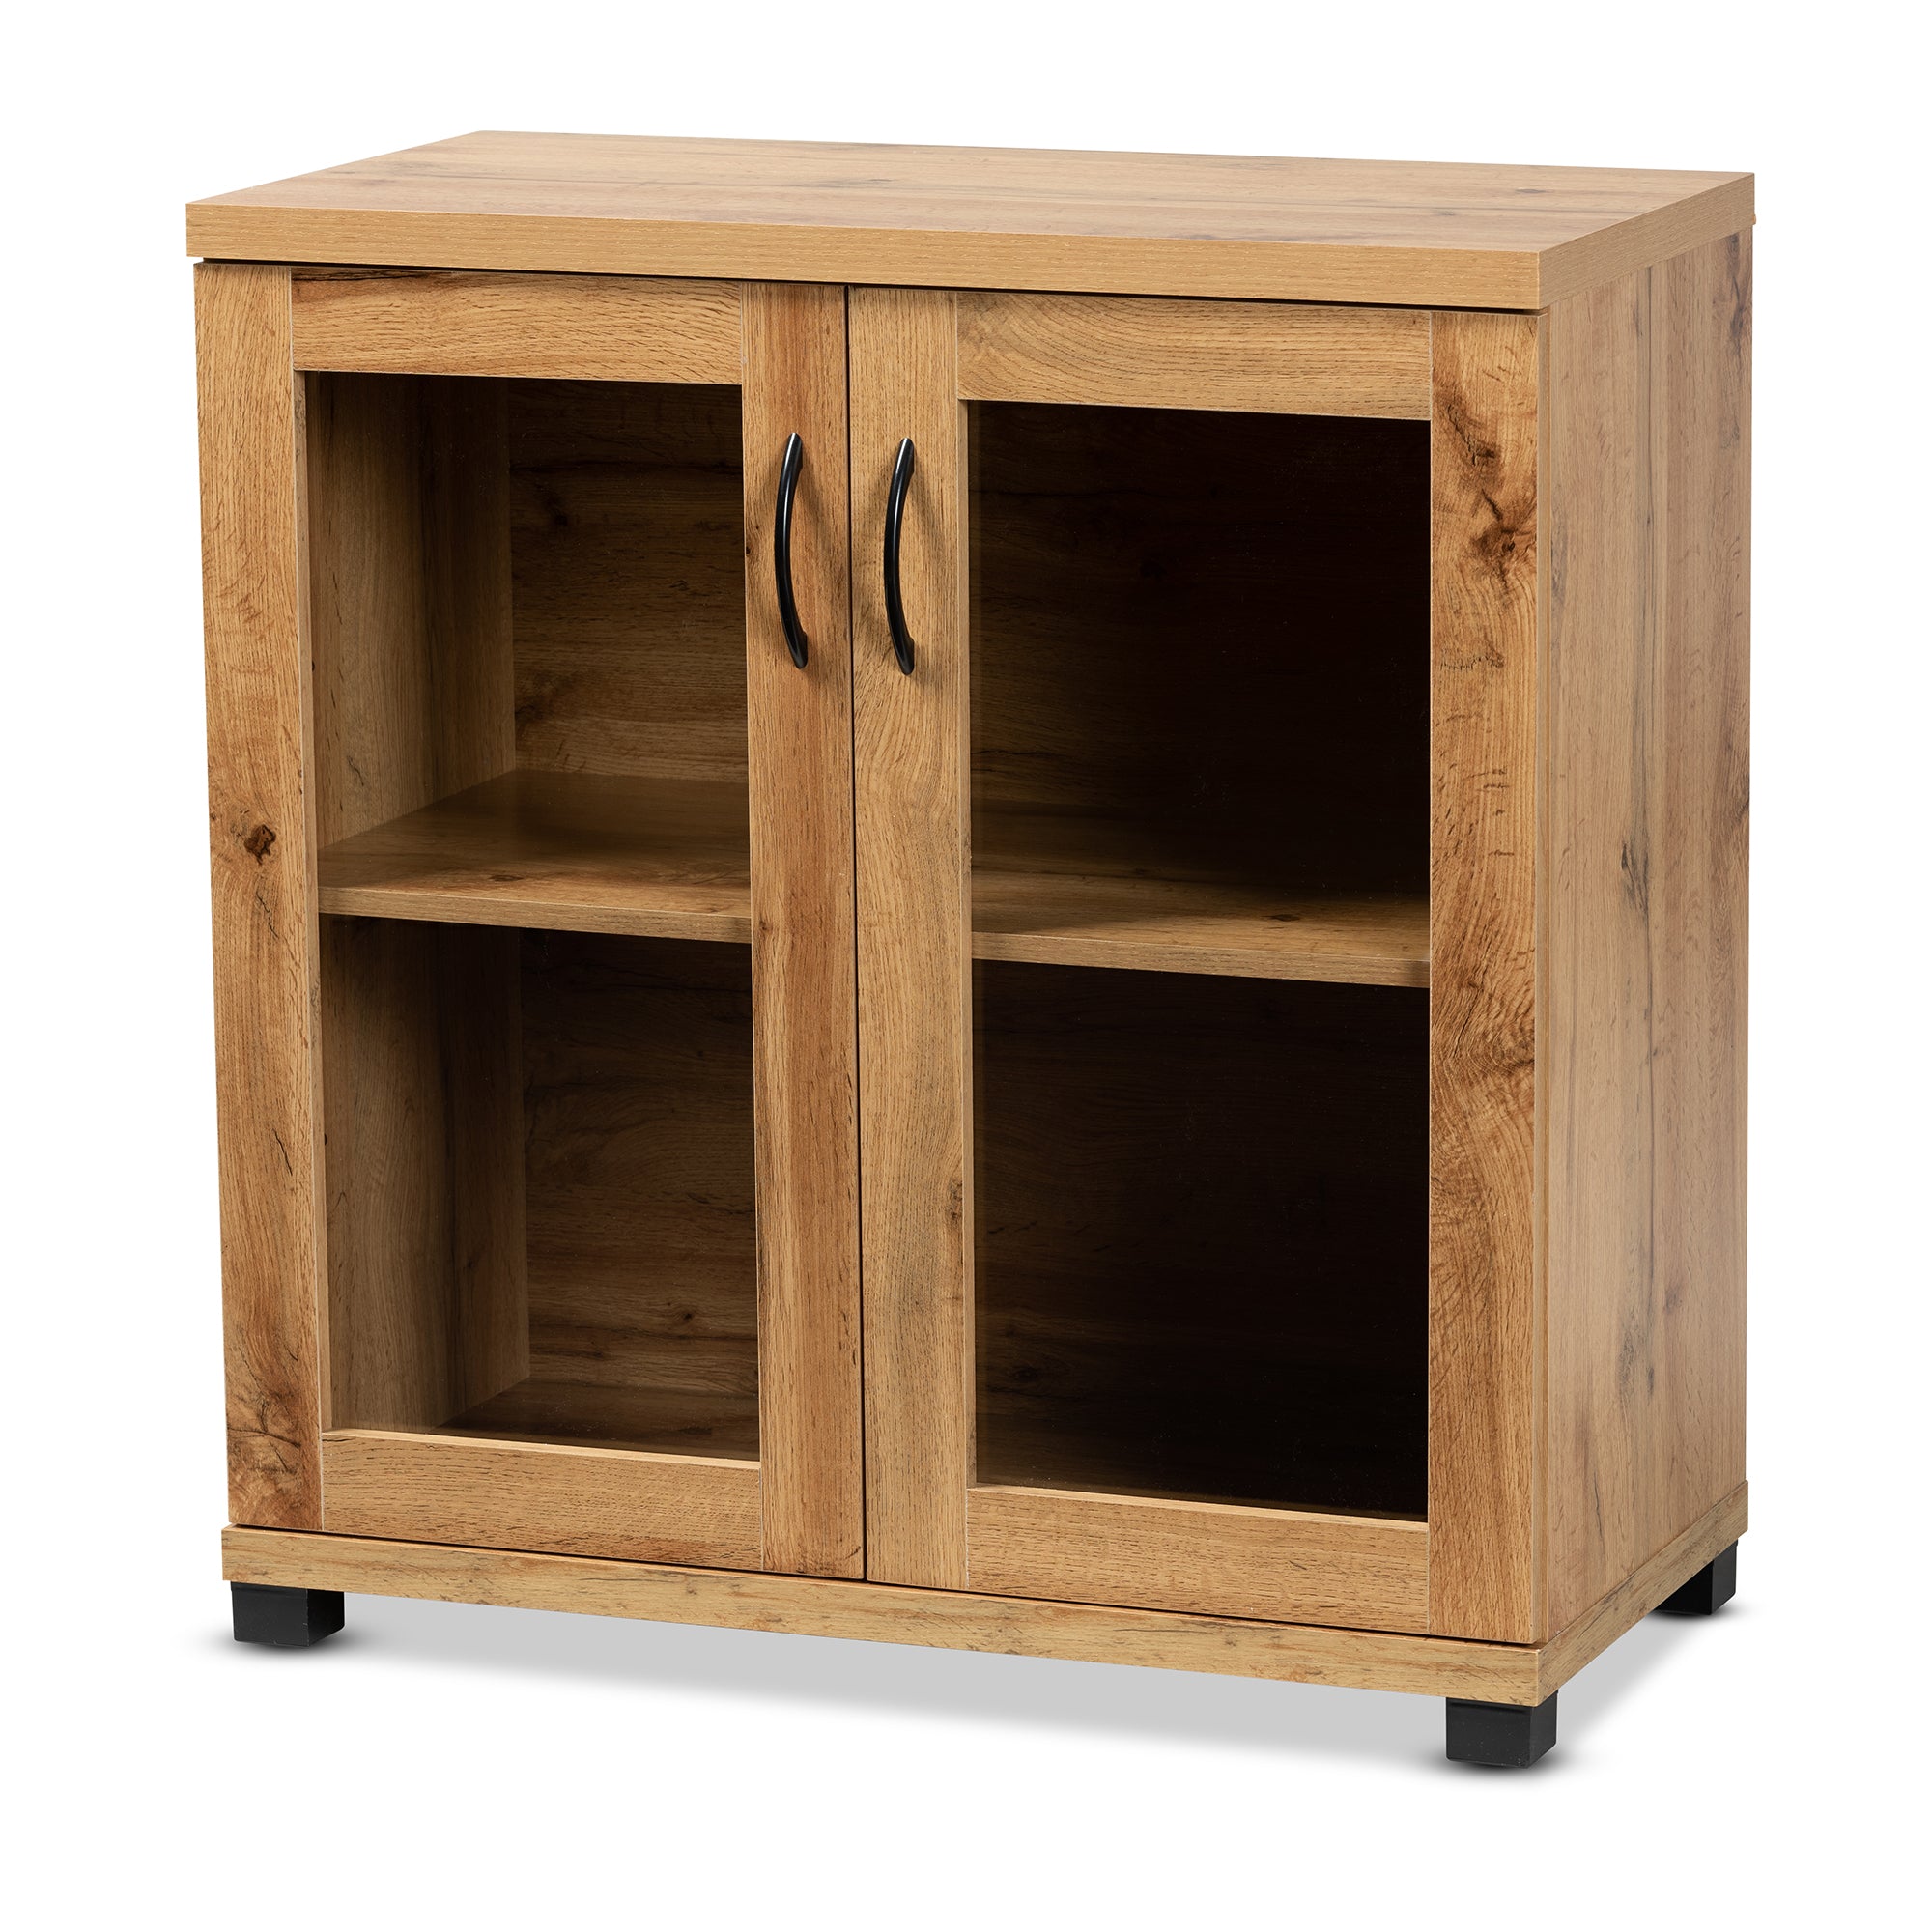 Zentra Modern Storage Cabinet 2-Door with Glass Doors-Storage Cabinet-Baxton Studio - WI-Wall2Wall Furnishings